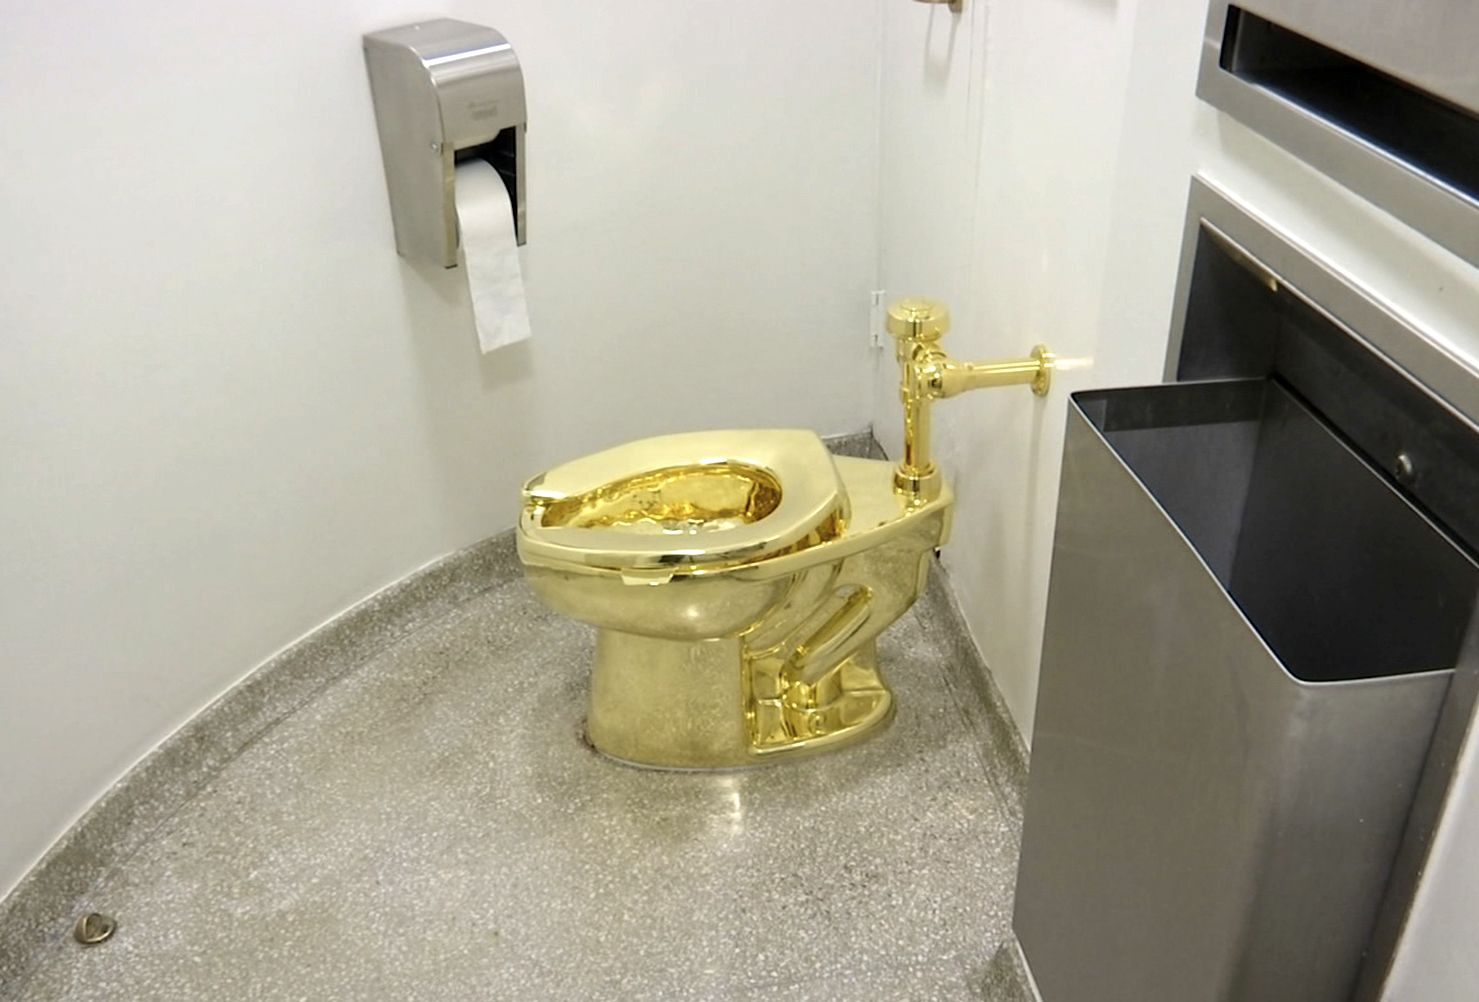 Z rodného domu Winstona Churchilla ukradli zlatý záchod v hodnote 1,1 milióna €